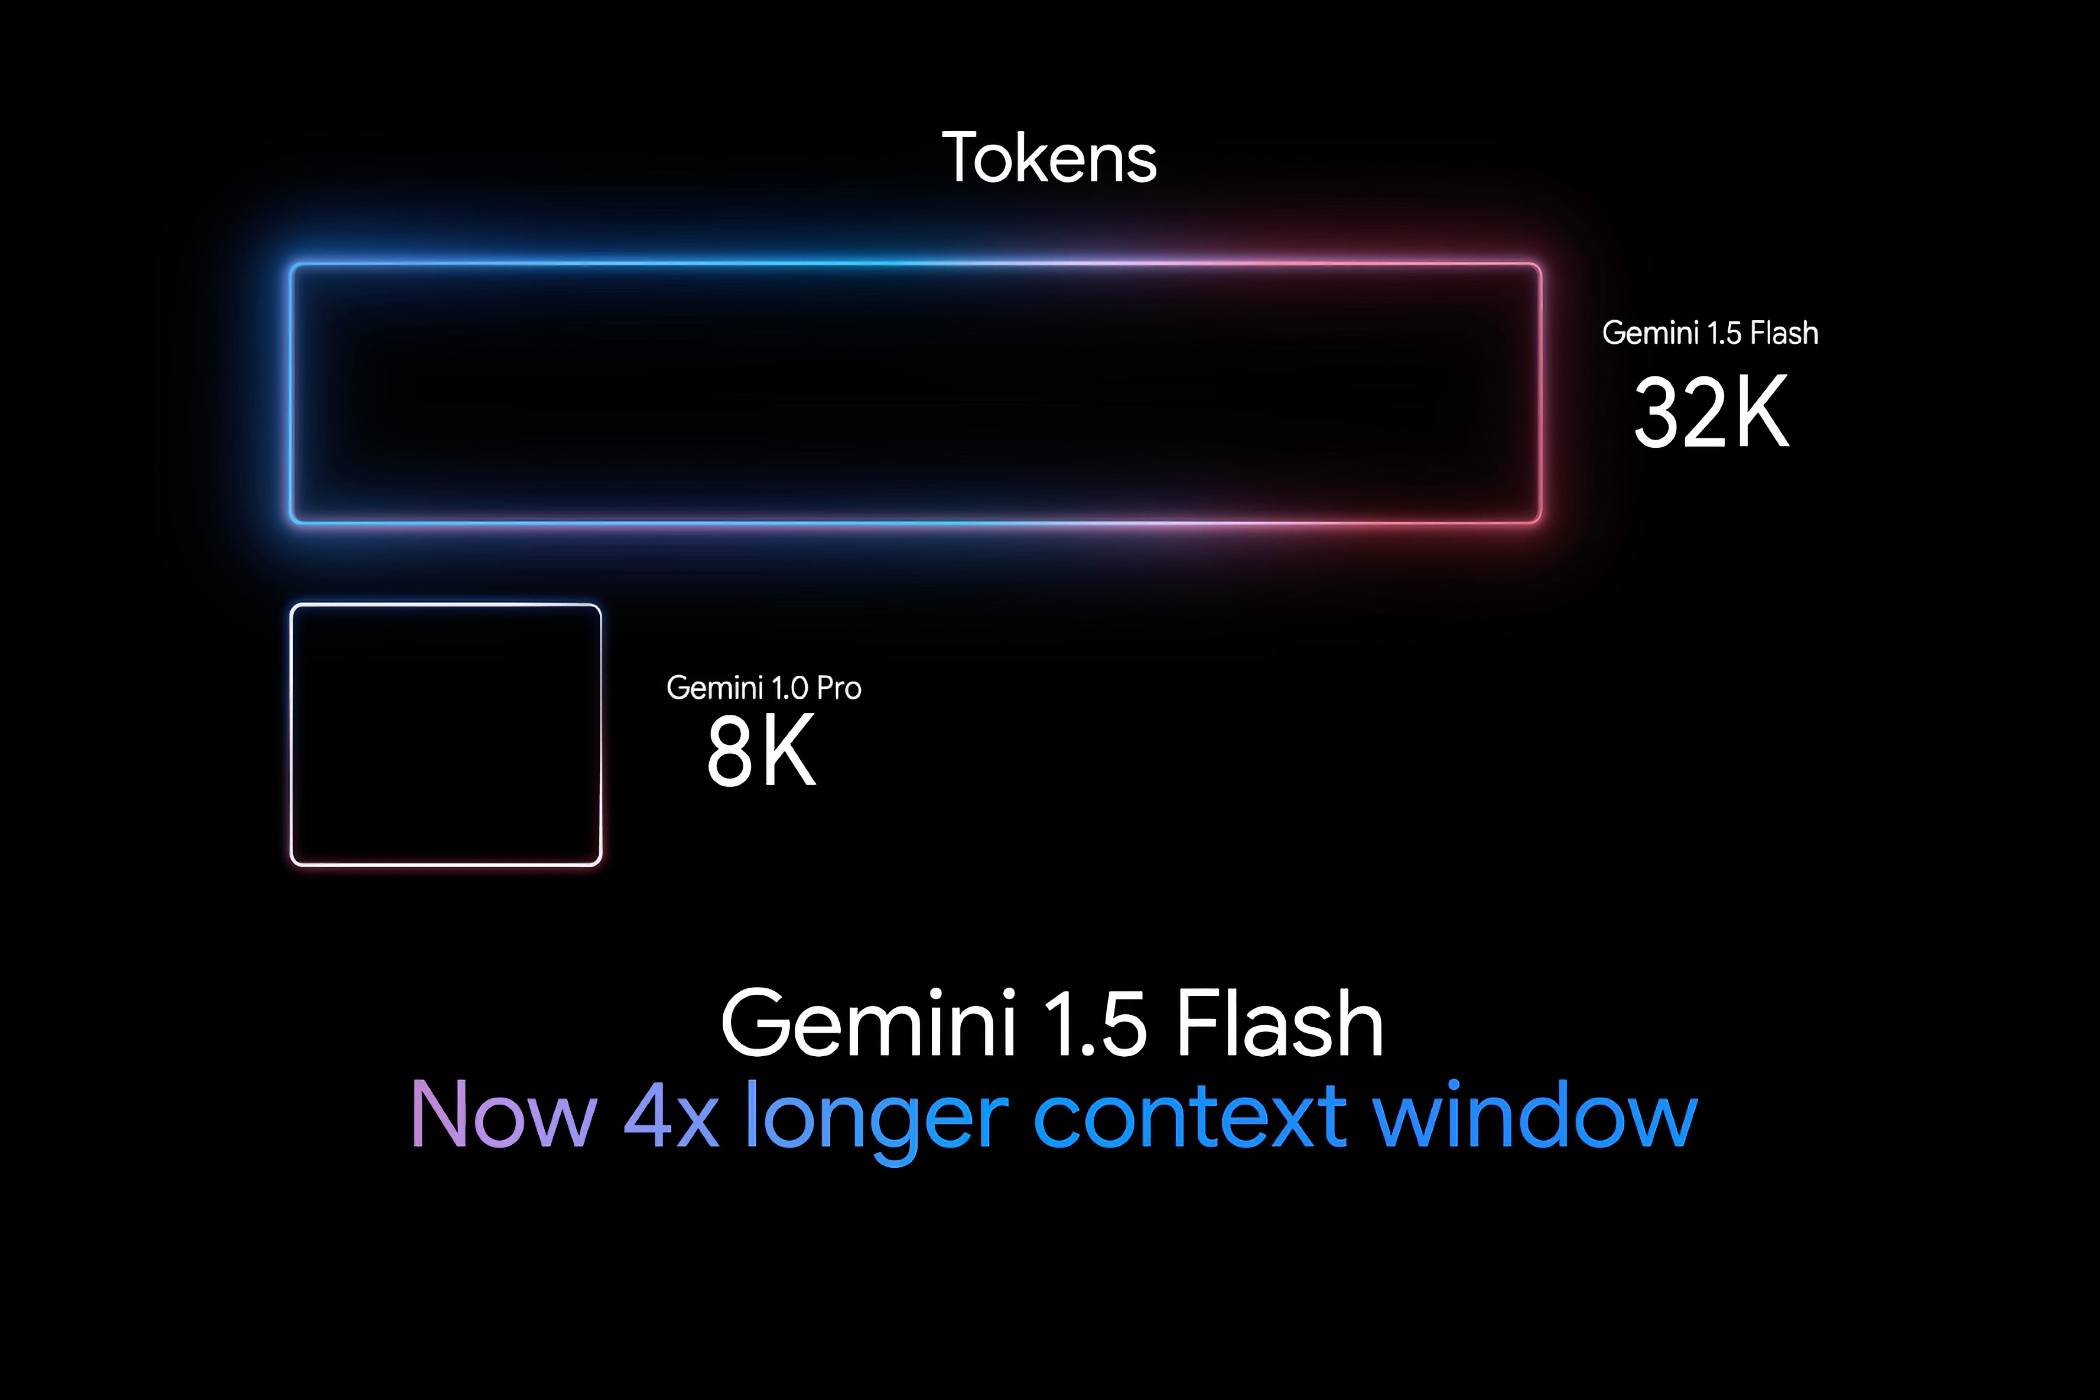 A presentation slide highlighting the key features of Google Gemini's 1.5 Flash AI model.